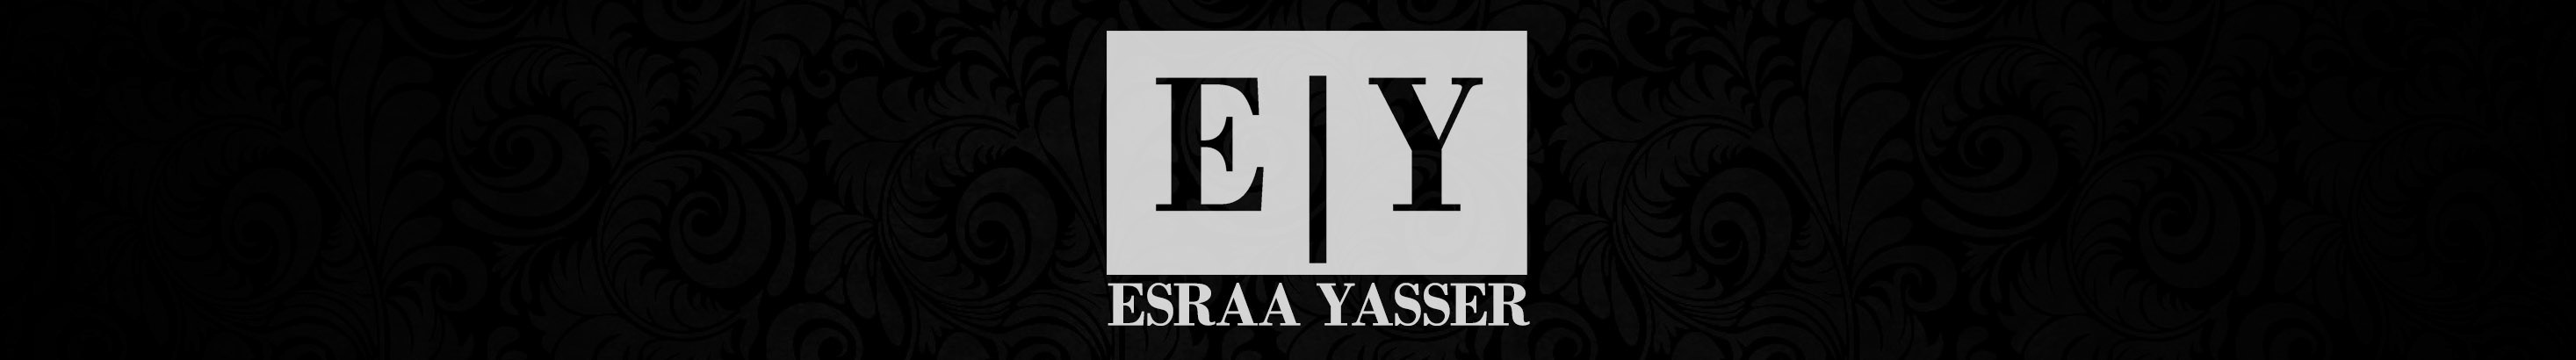 Banner de perfil de Esraa Yasser